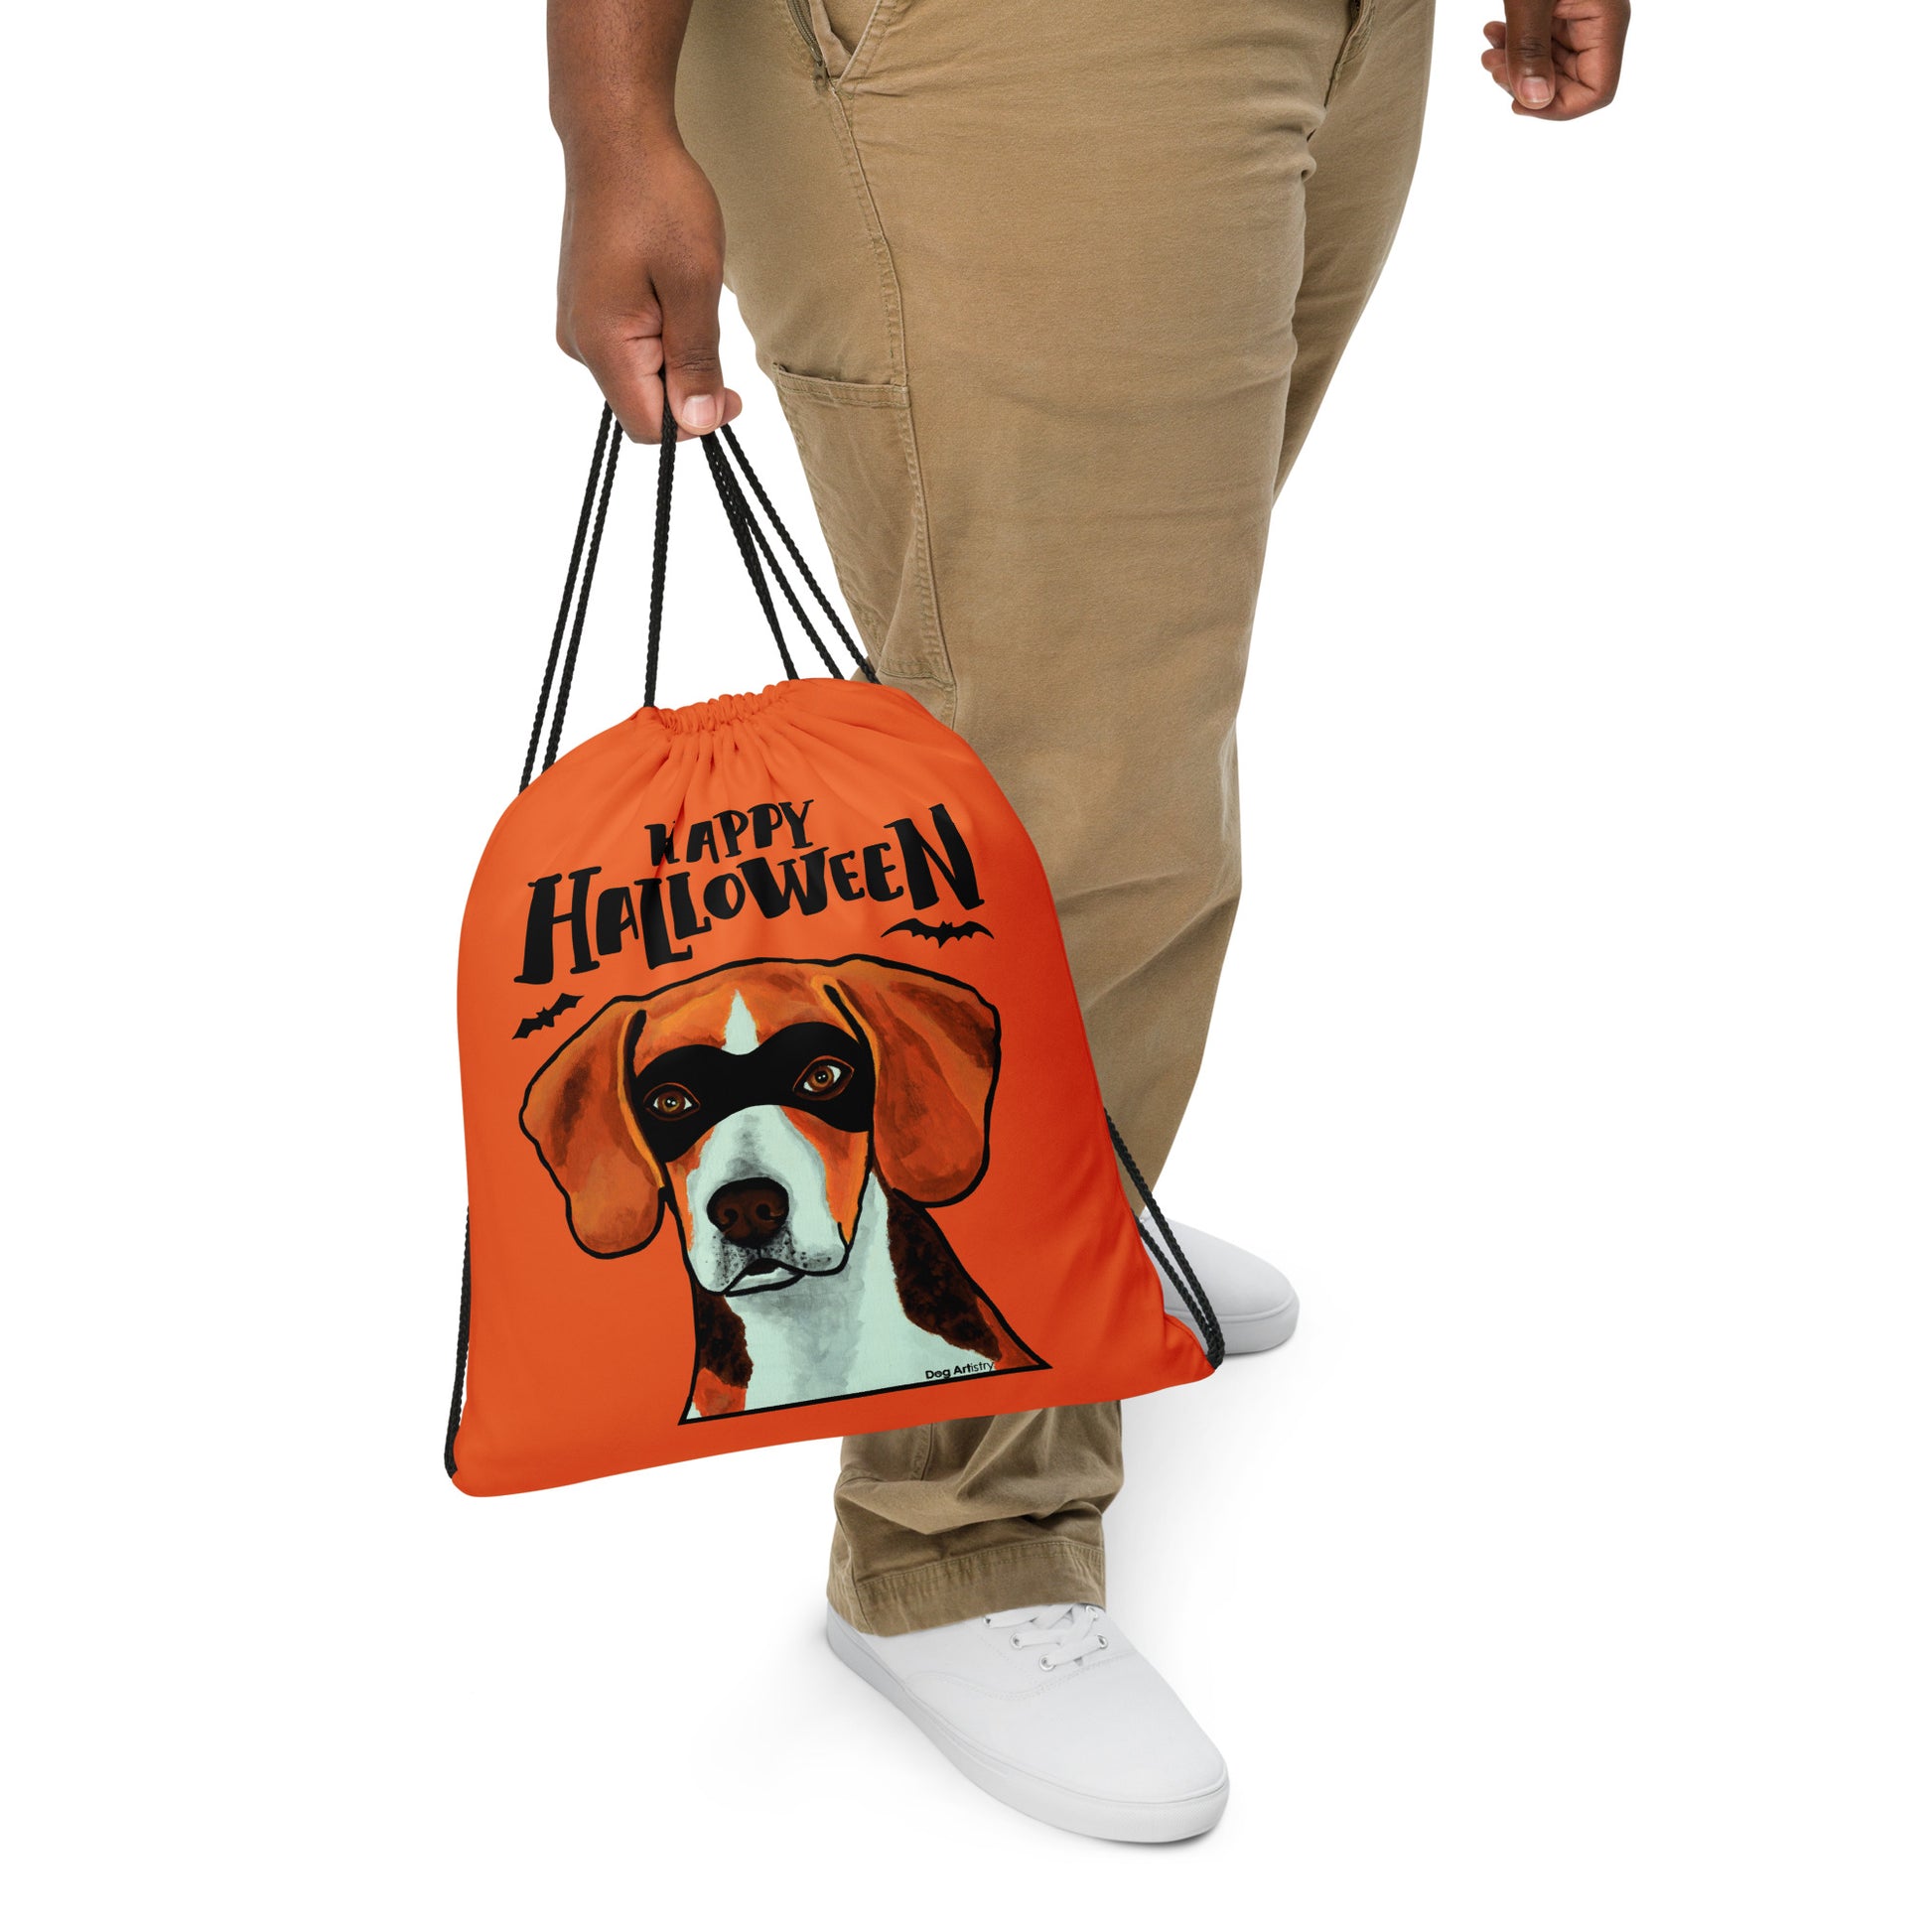 Happy Halloween Beagle wearing mask drawstring bag by Dog Artistry Halloween candy bag.